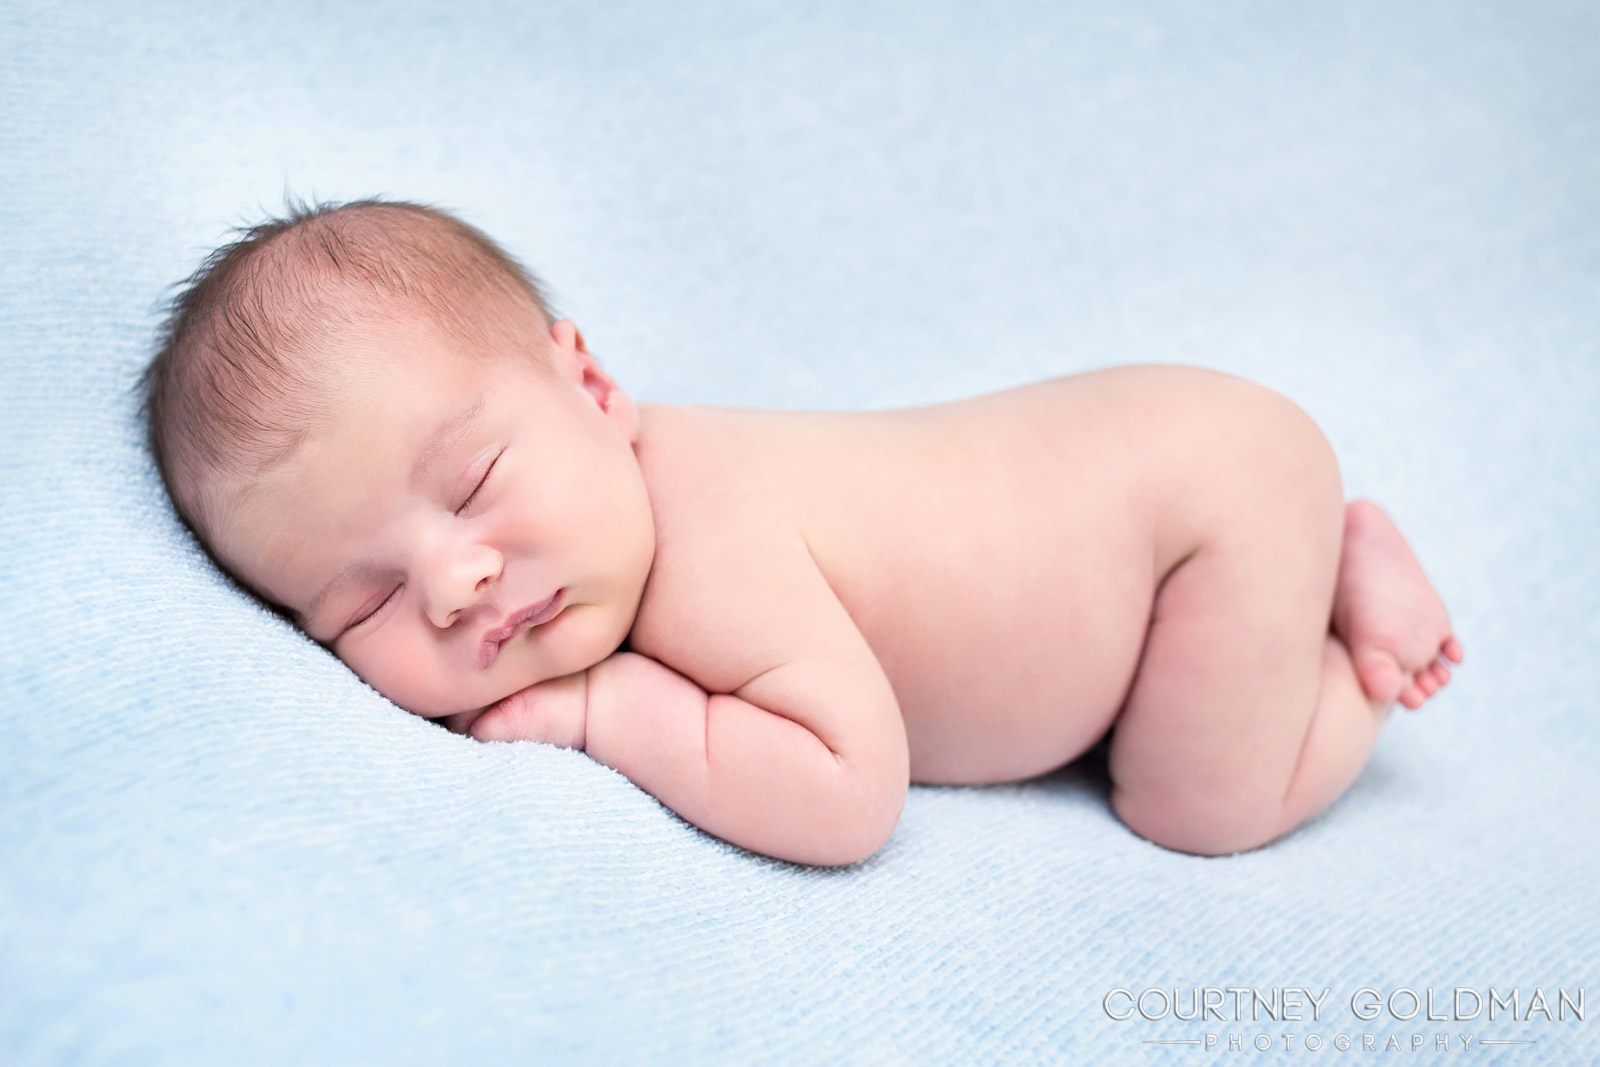 Atlanta Maternity and Newborn Photography by Courtney Goldman 55.jpg